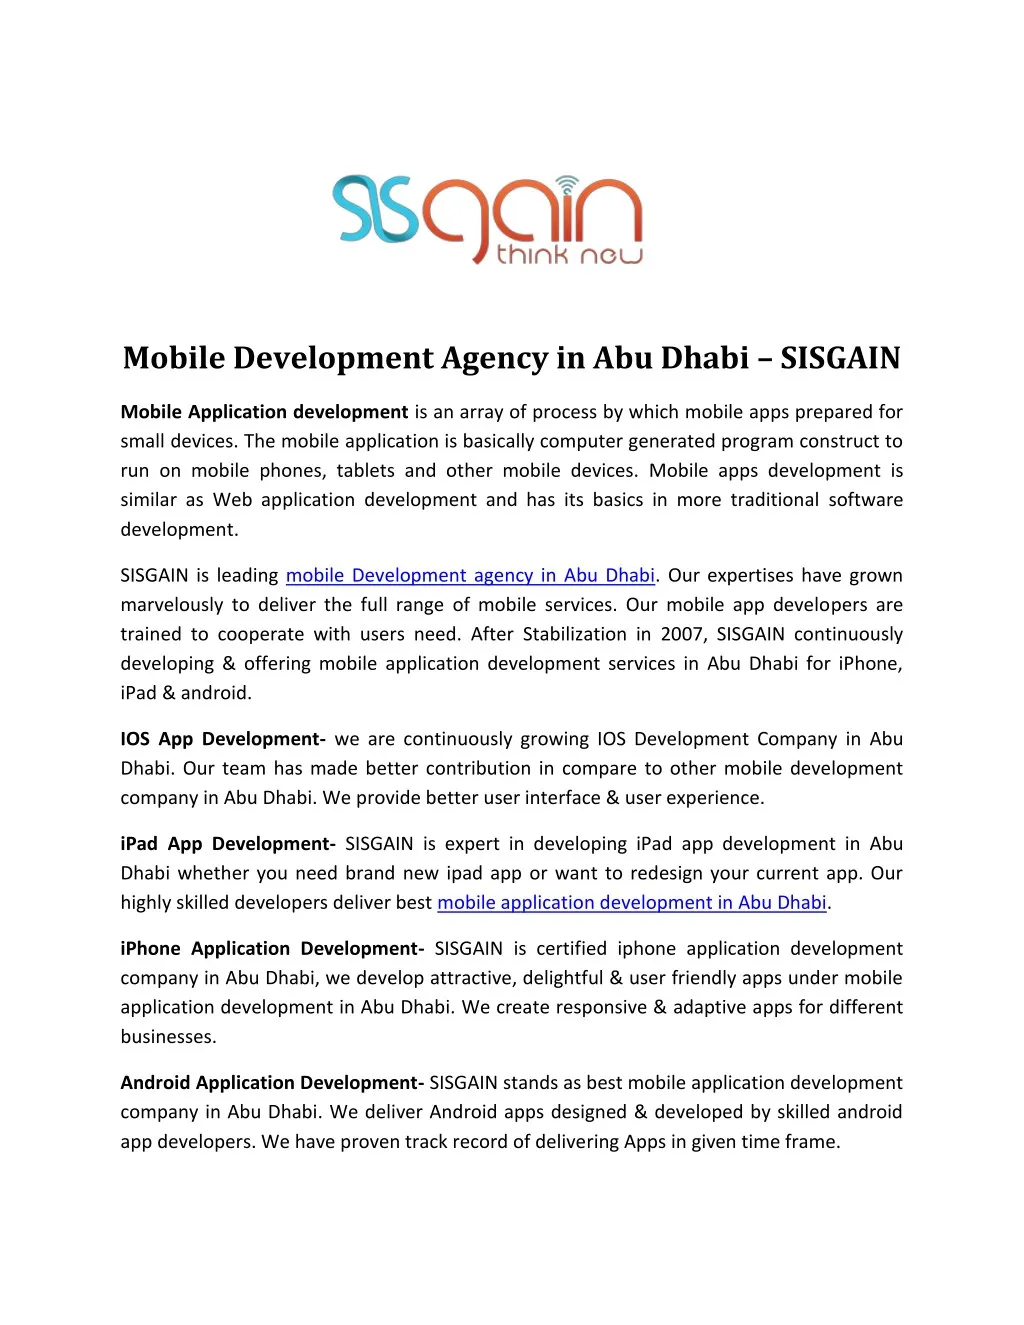 mobile development agency in abu dhabi sisgain